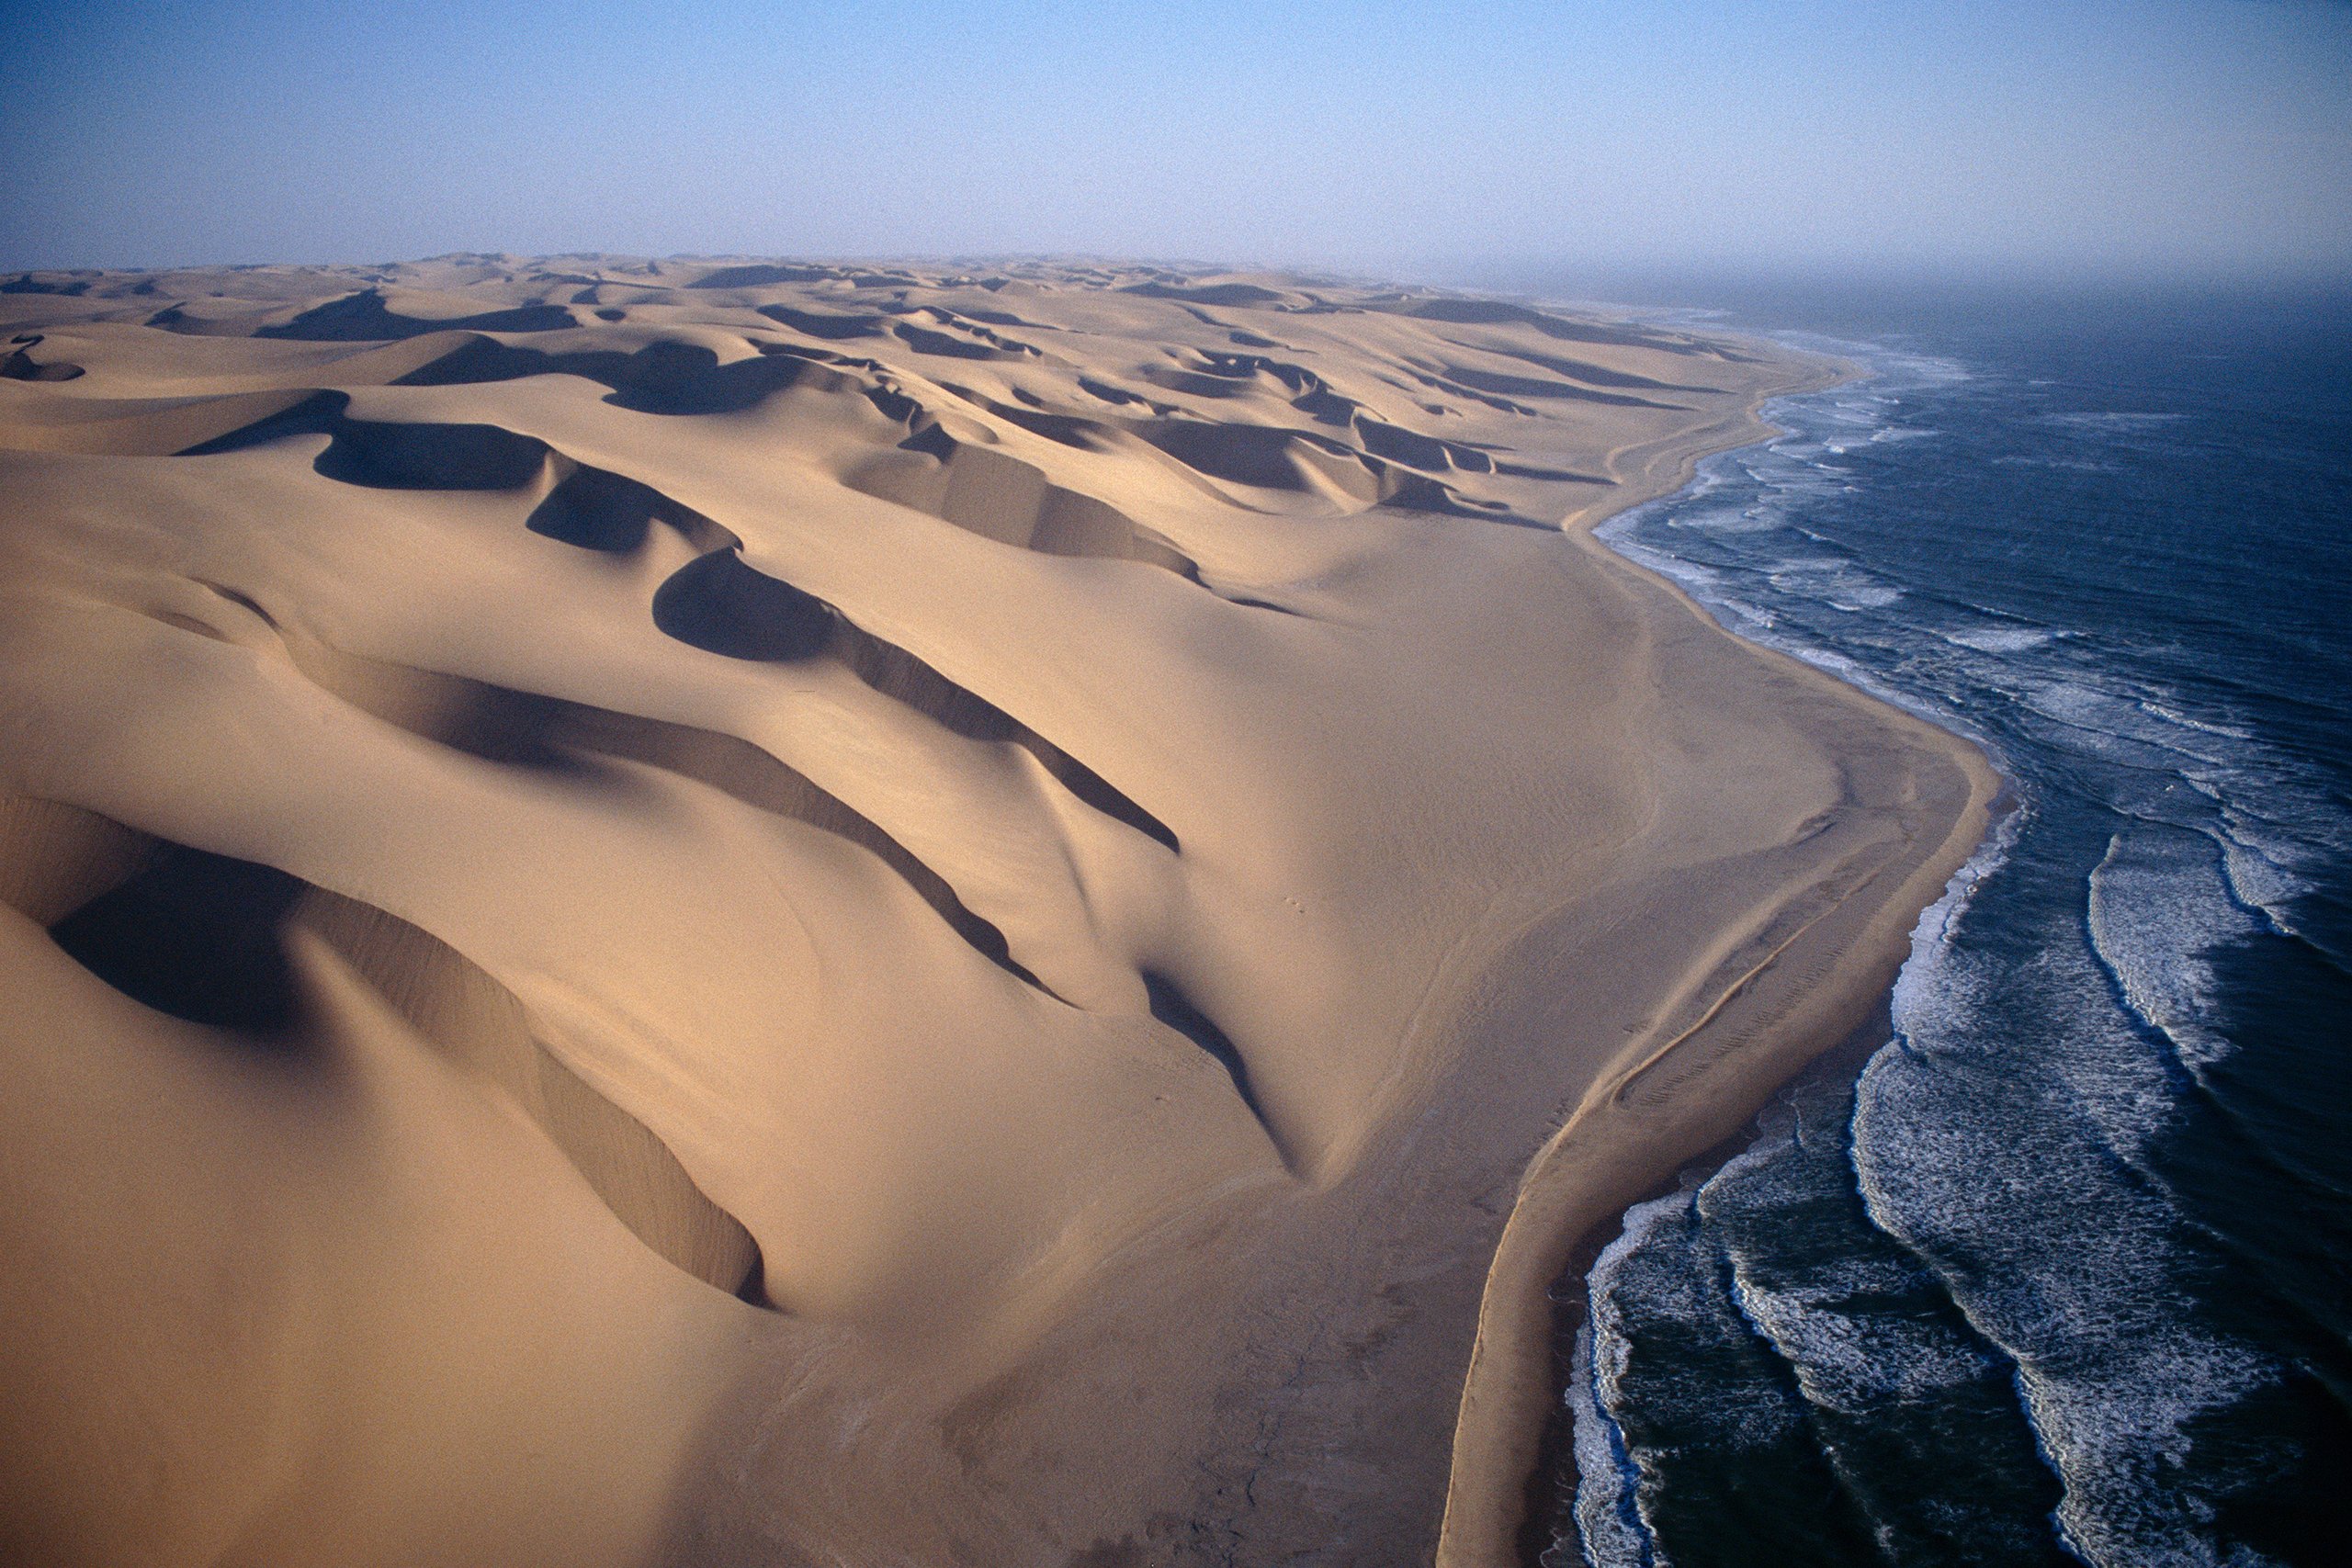 Скелеты сахары. Намибия берег скелетов (Skeleton Coast). Намибия пустыня Намиб. Пустыня Намиб дюны. Побережье пустыни Намиб.